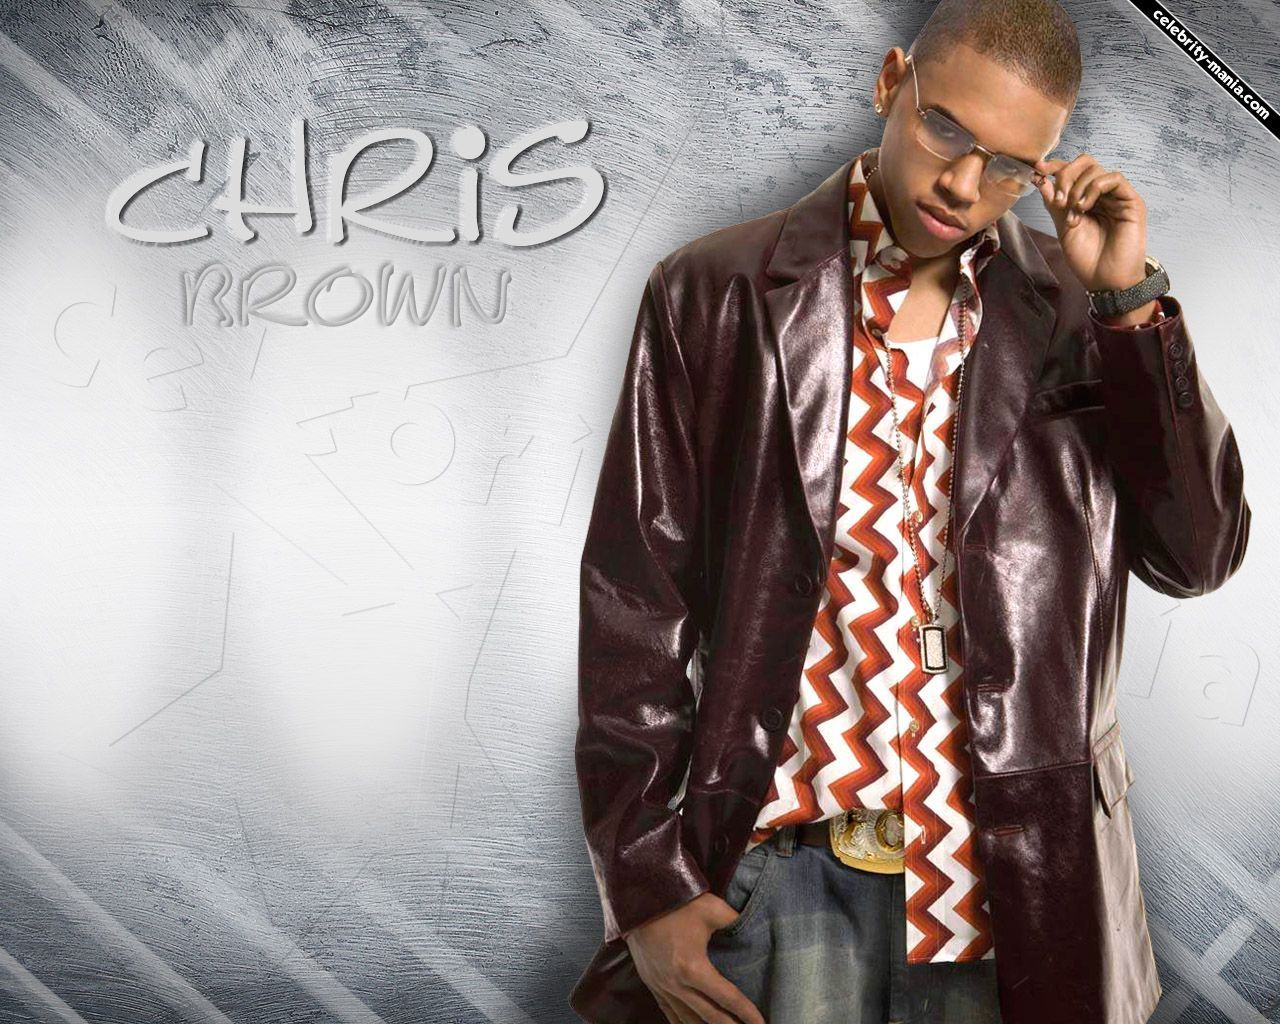 Chris Brown - Chris Brown Wallpaper (434475) - Fanpop